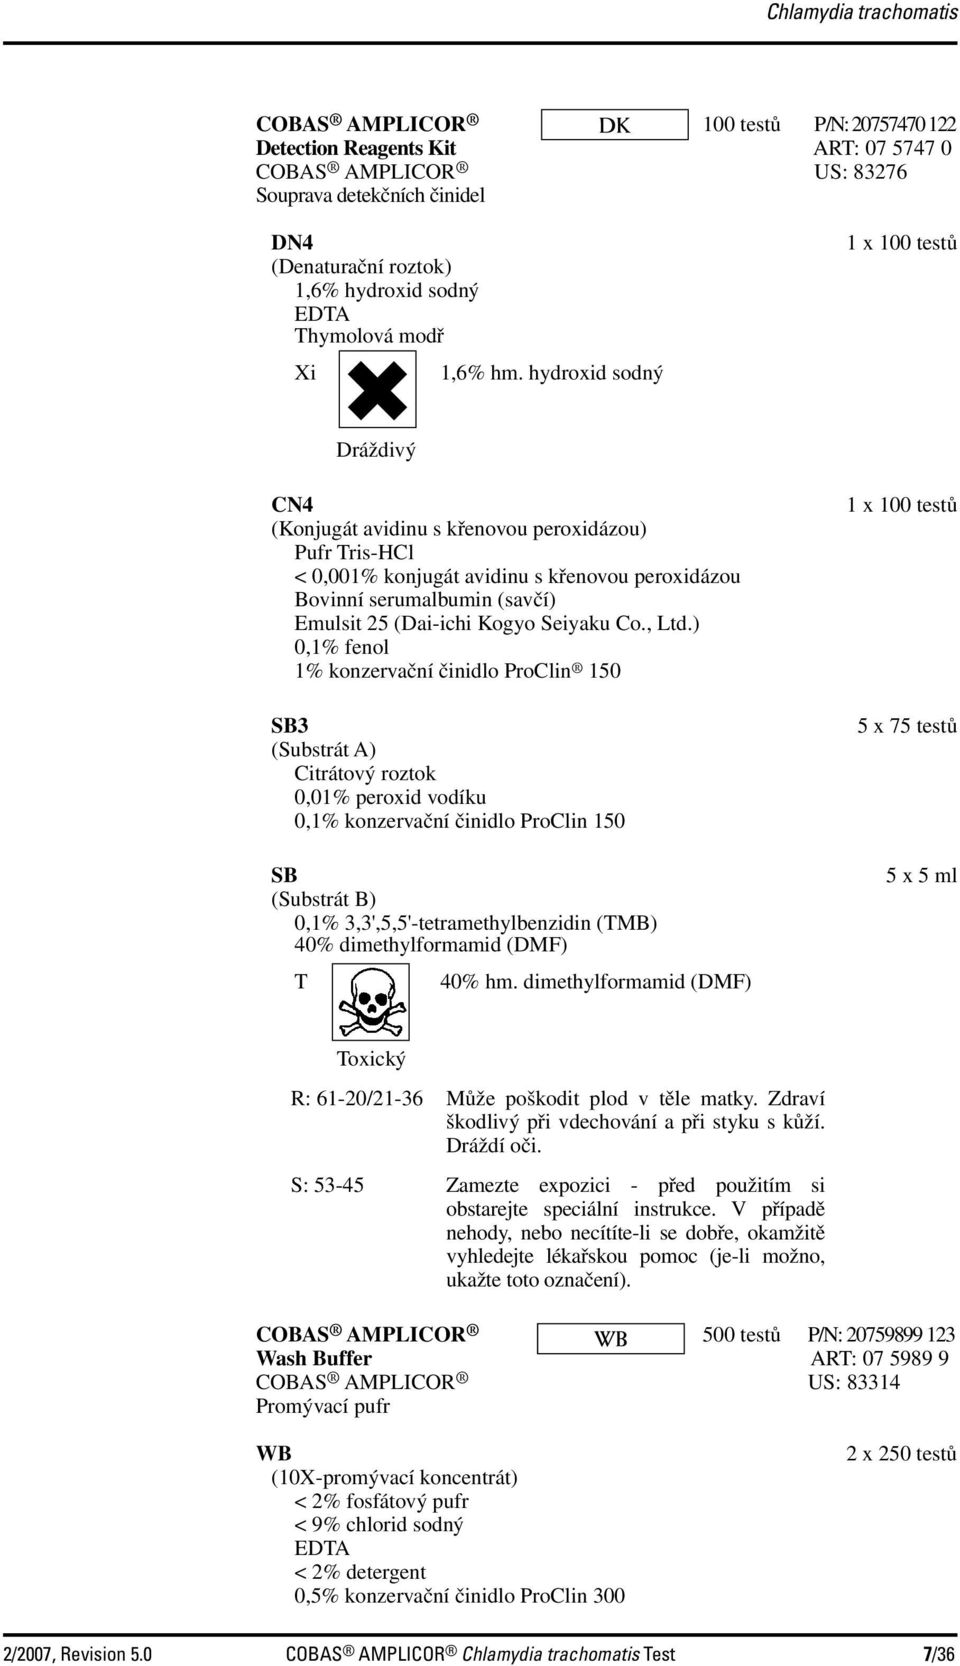 hydroxid sodný + 1 x 100 testů Dráždivý CN4 (Konjugát avidinu s křenovou peroxidázou) Pufr Tris-HCl < 0,001% konjugát avidinu s křenovou peroxidázou Bovinní serumalbumin (savčí) Emulsit 25 (Dai-ichi